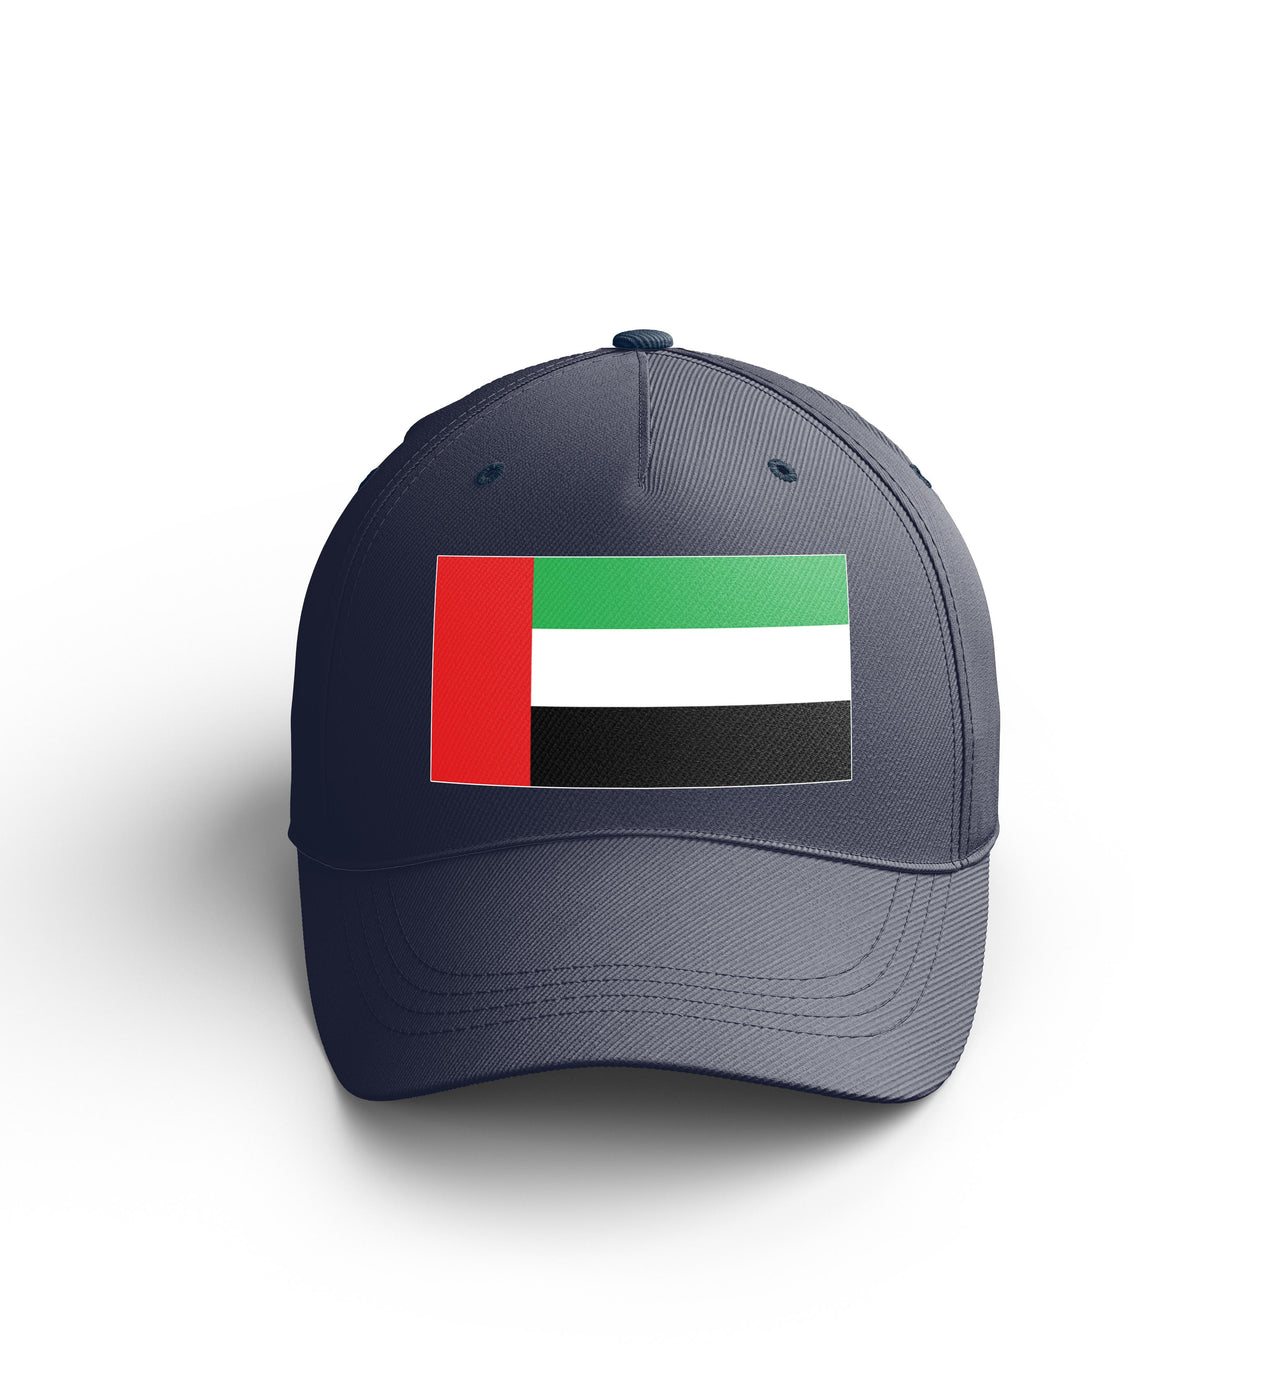 UAE Flag Embroidered Hats